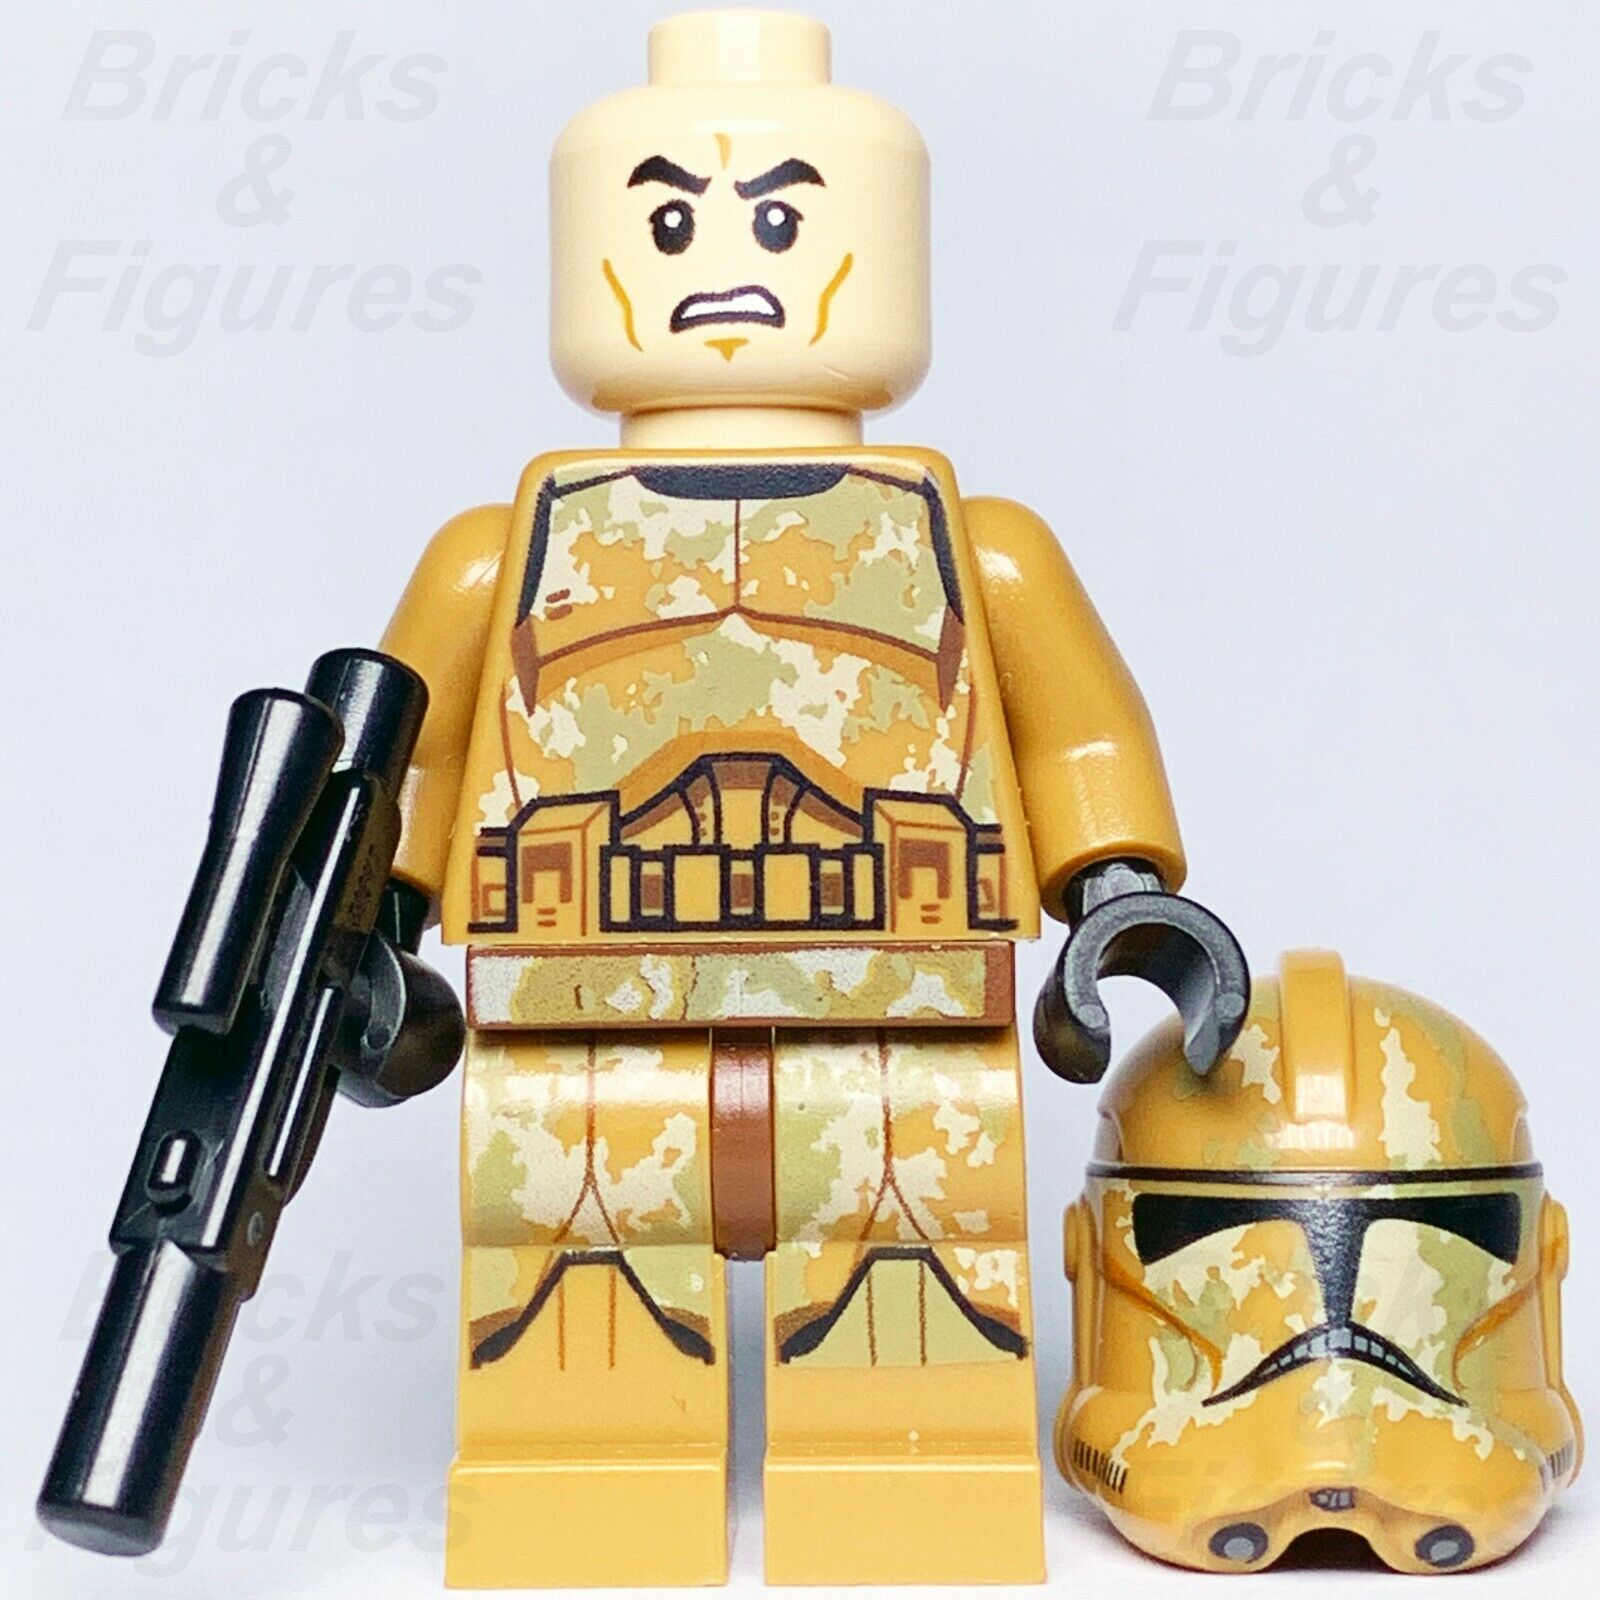 New Star Wars LEGO Geonosis Phase 2 Clone Trooper Minifigure 75089 - Bricks & Figures